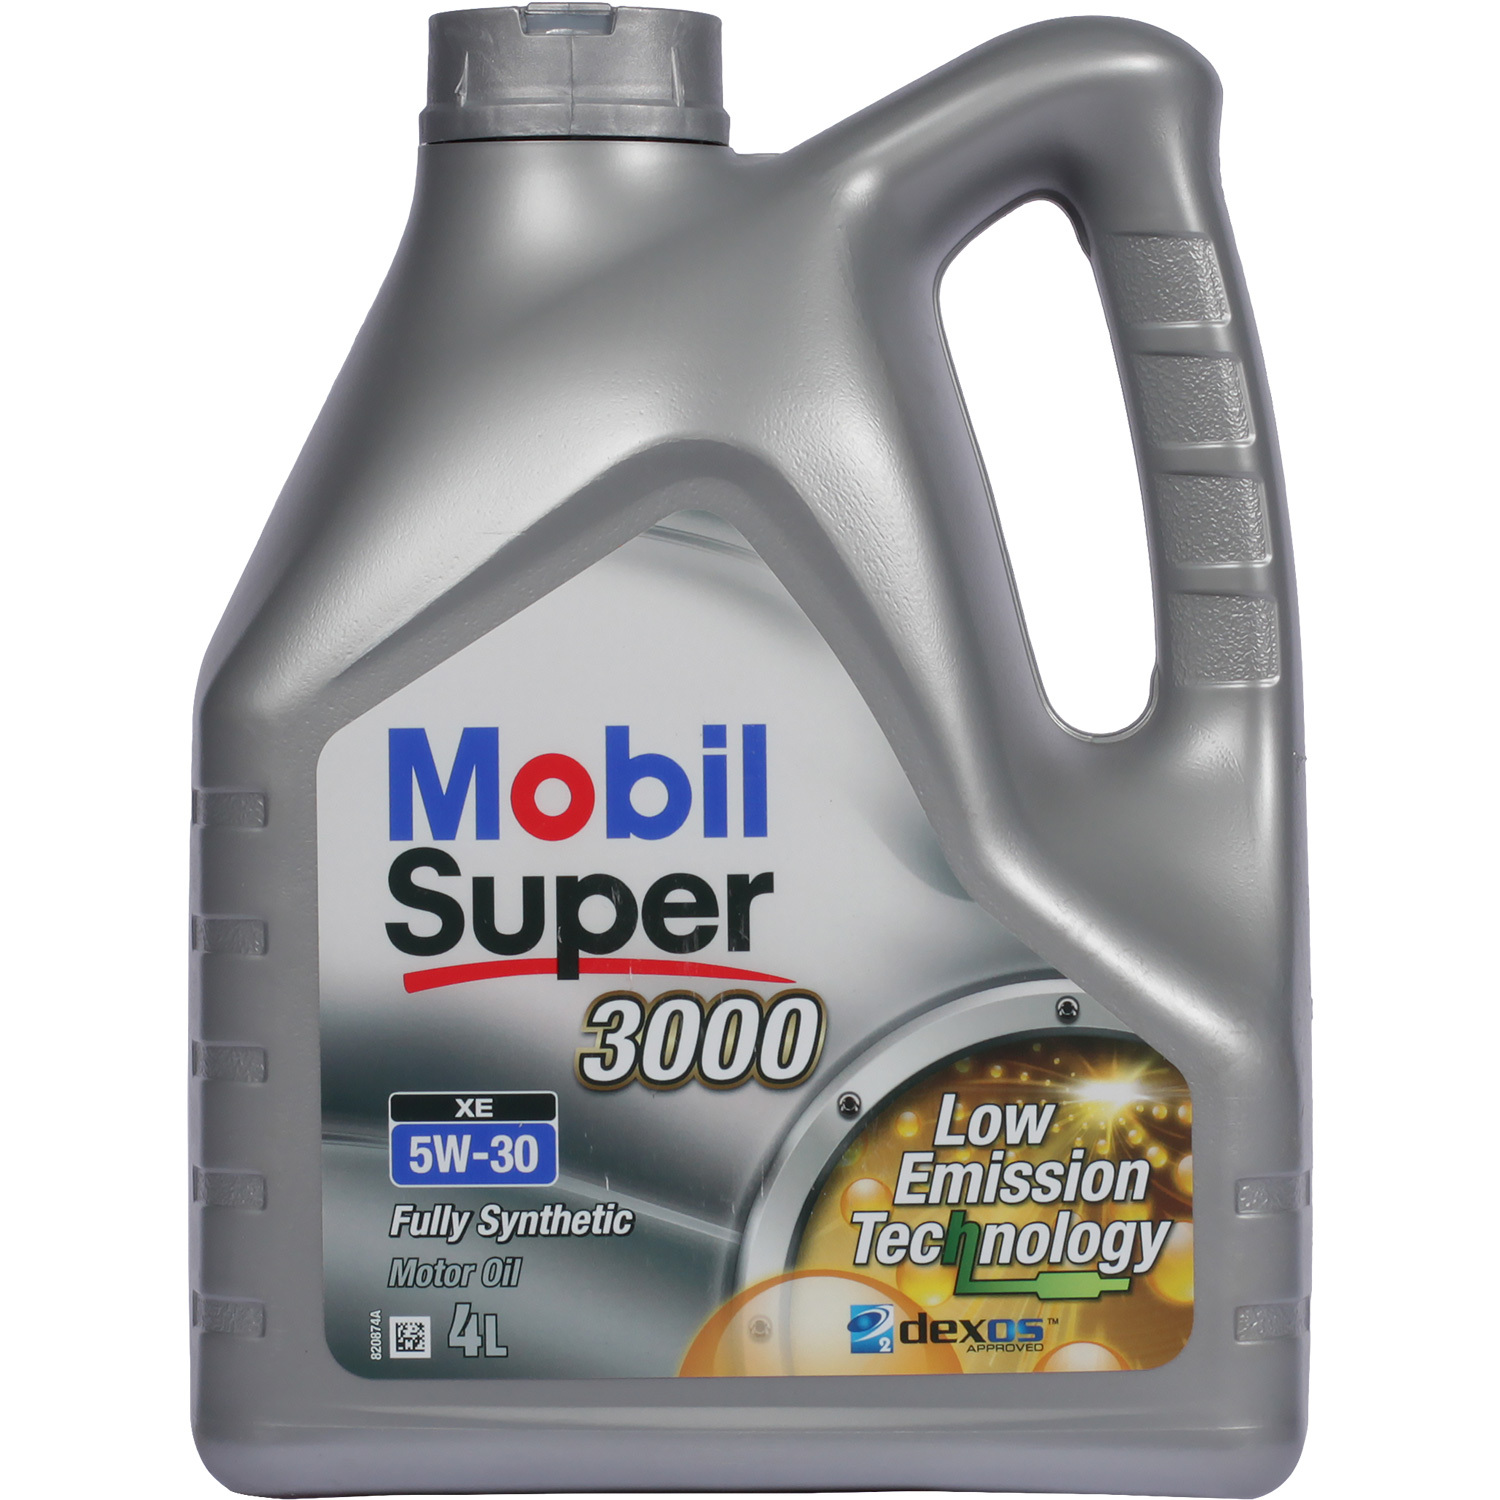 Mobil Моторное масло Mobil Super 3000 XE 5W-30, 4 л масло моторное mobil super 3000 x1 5w 40 1 л синтетика